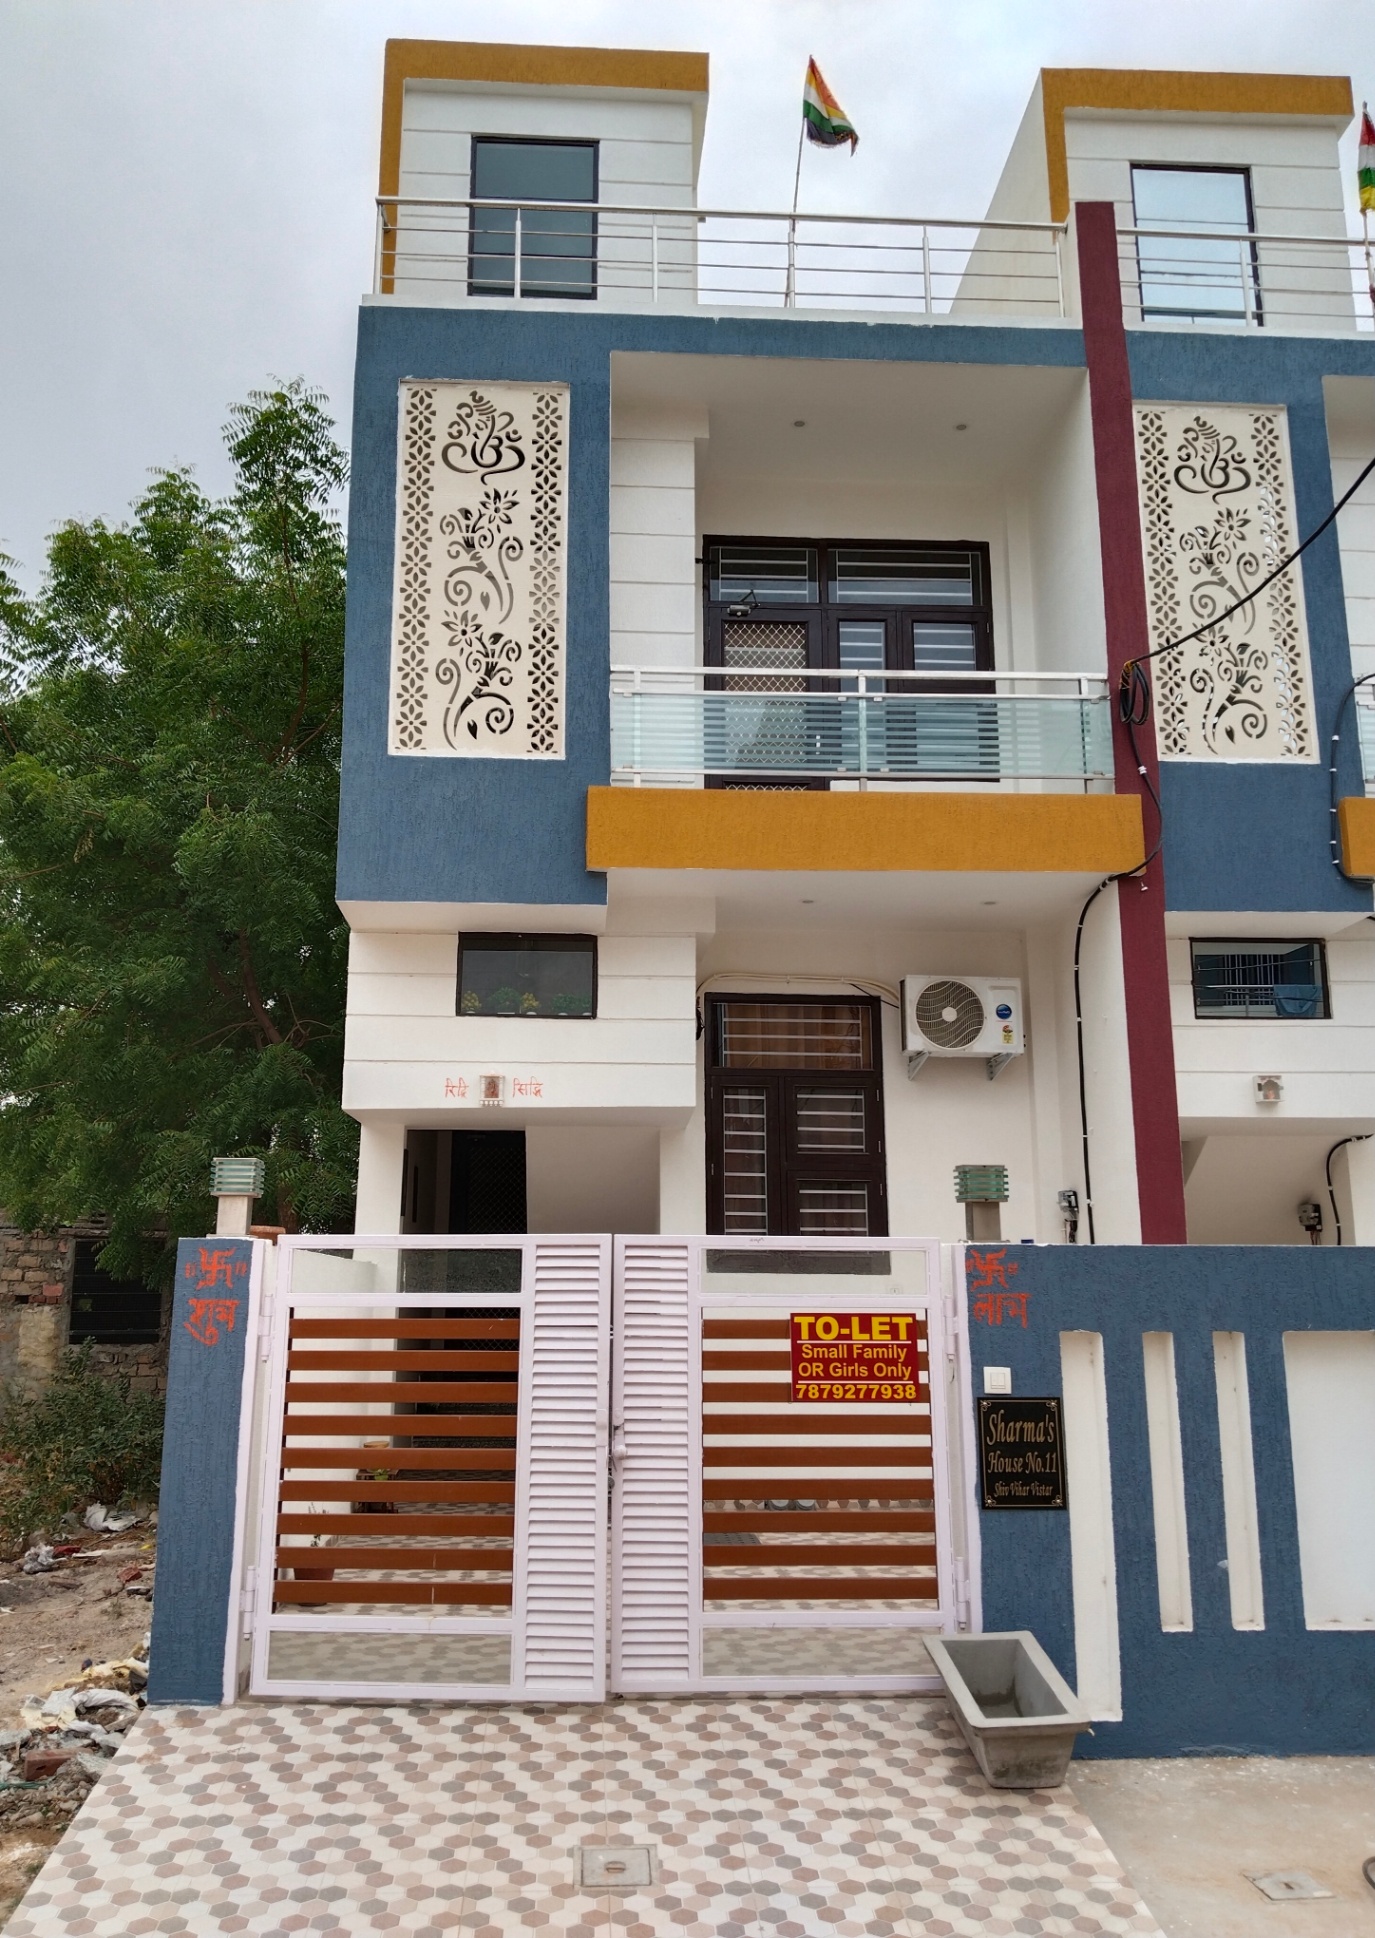 2 Bed/ 2 Bath Rent Apartment/ Flat; 900 sq. ft. carpet area, Furnished for rent @Shiv vihar vistar, Manyawas, Mansarover 